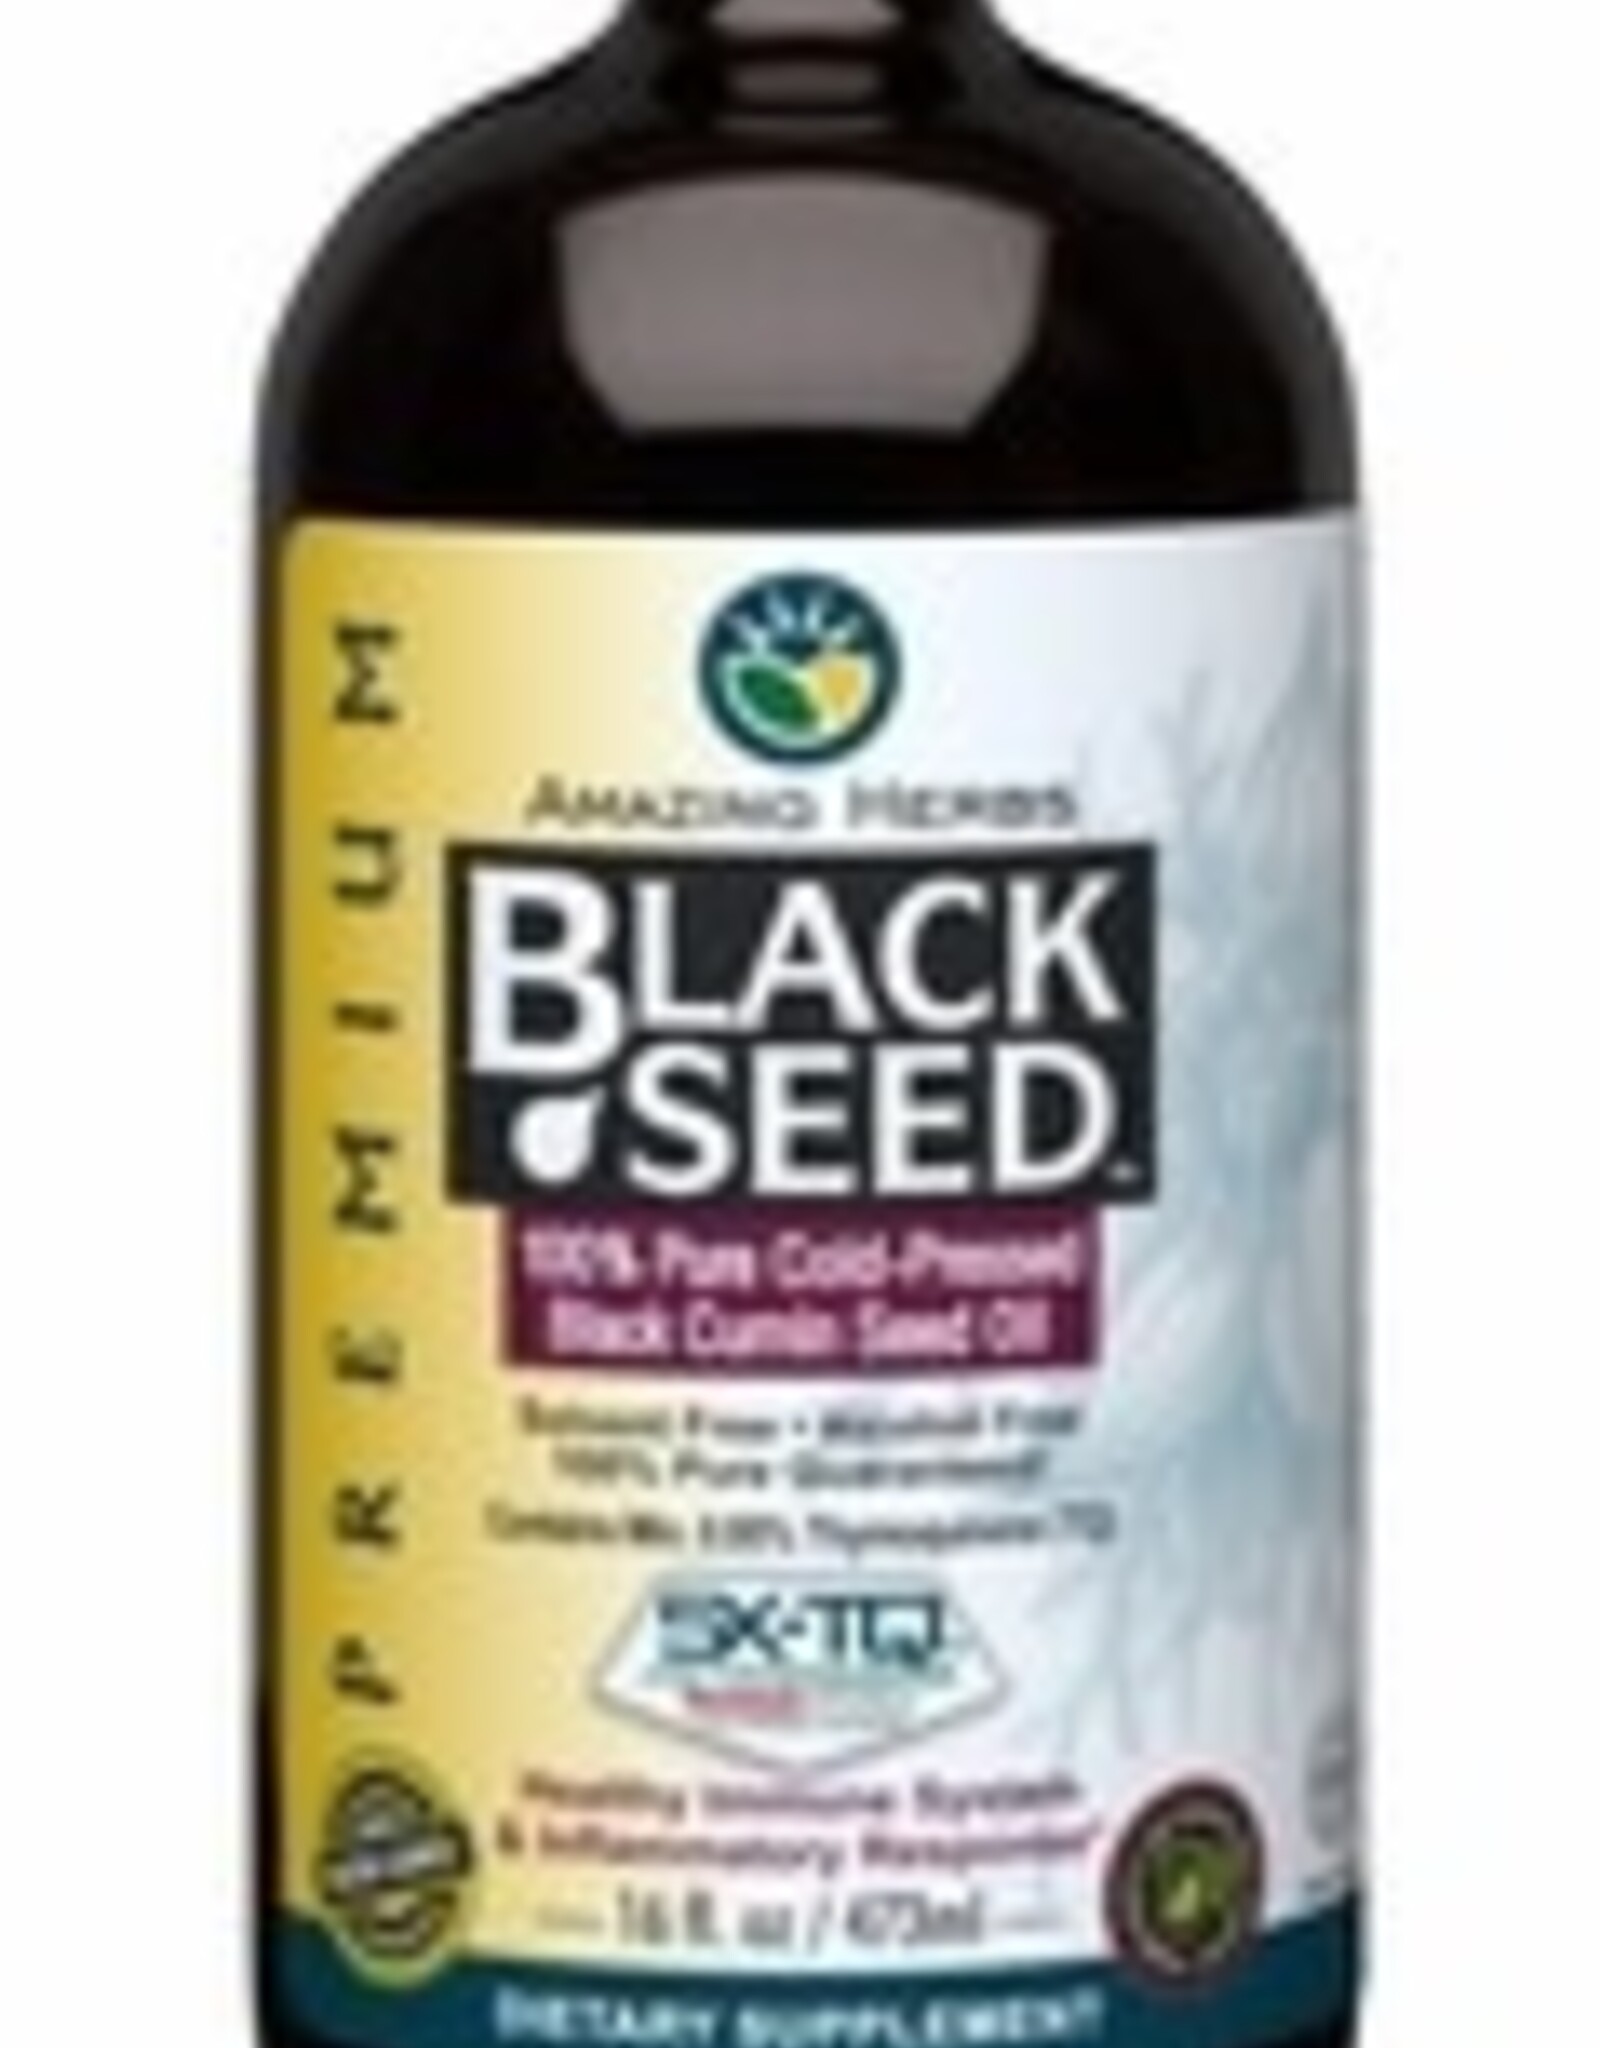 Amazing herbs Black seed Oil-Amazing Herbs